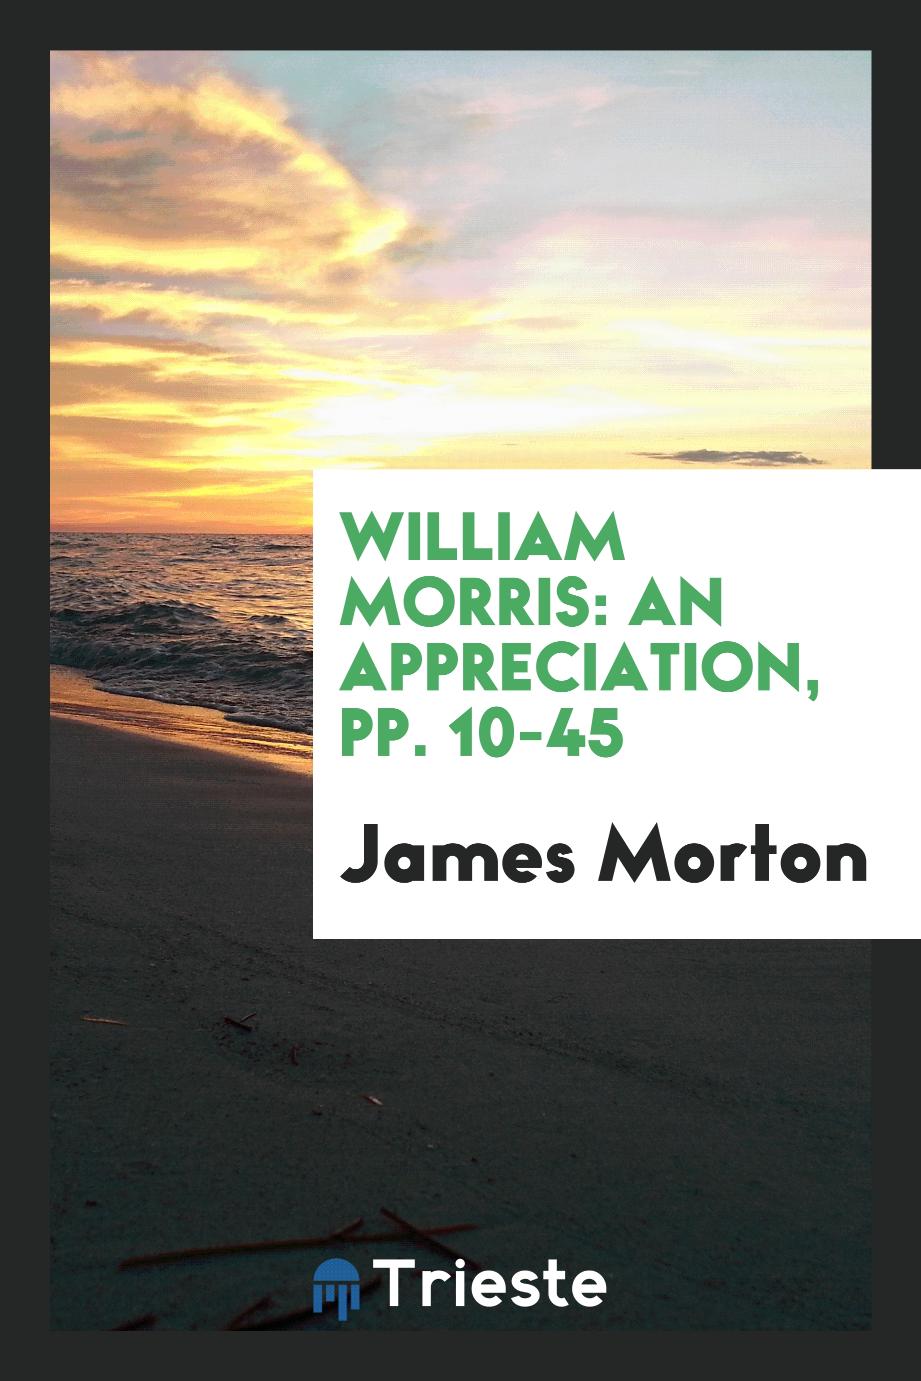 William Morris: An Appreciation, pp. 10-45